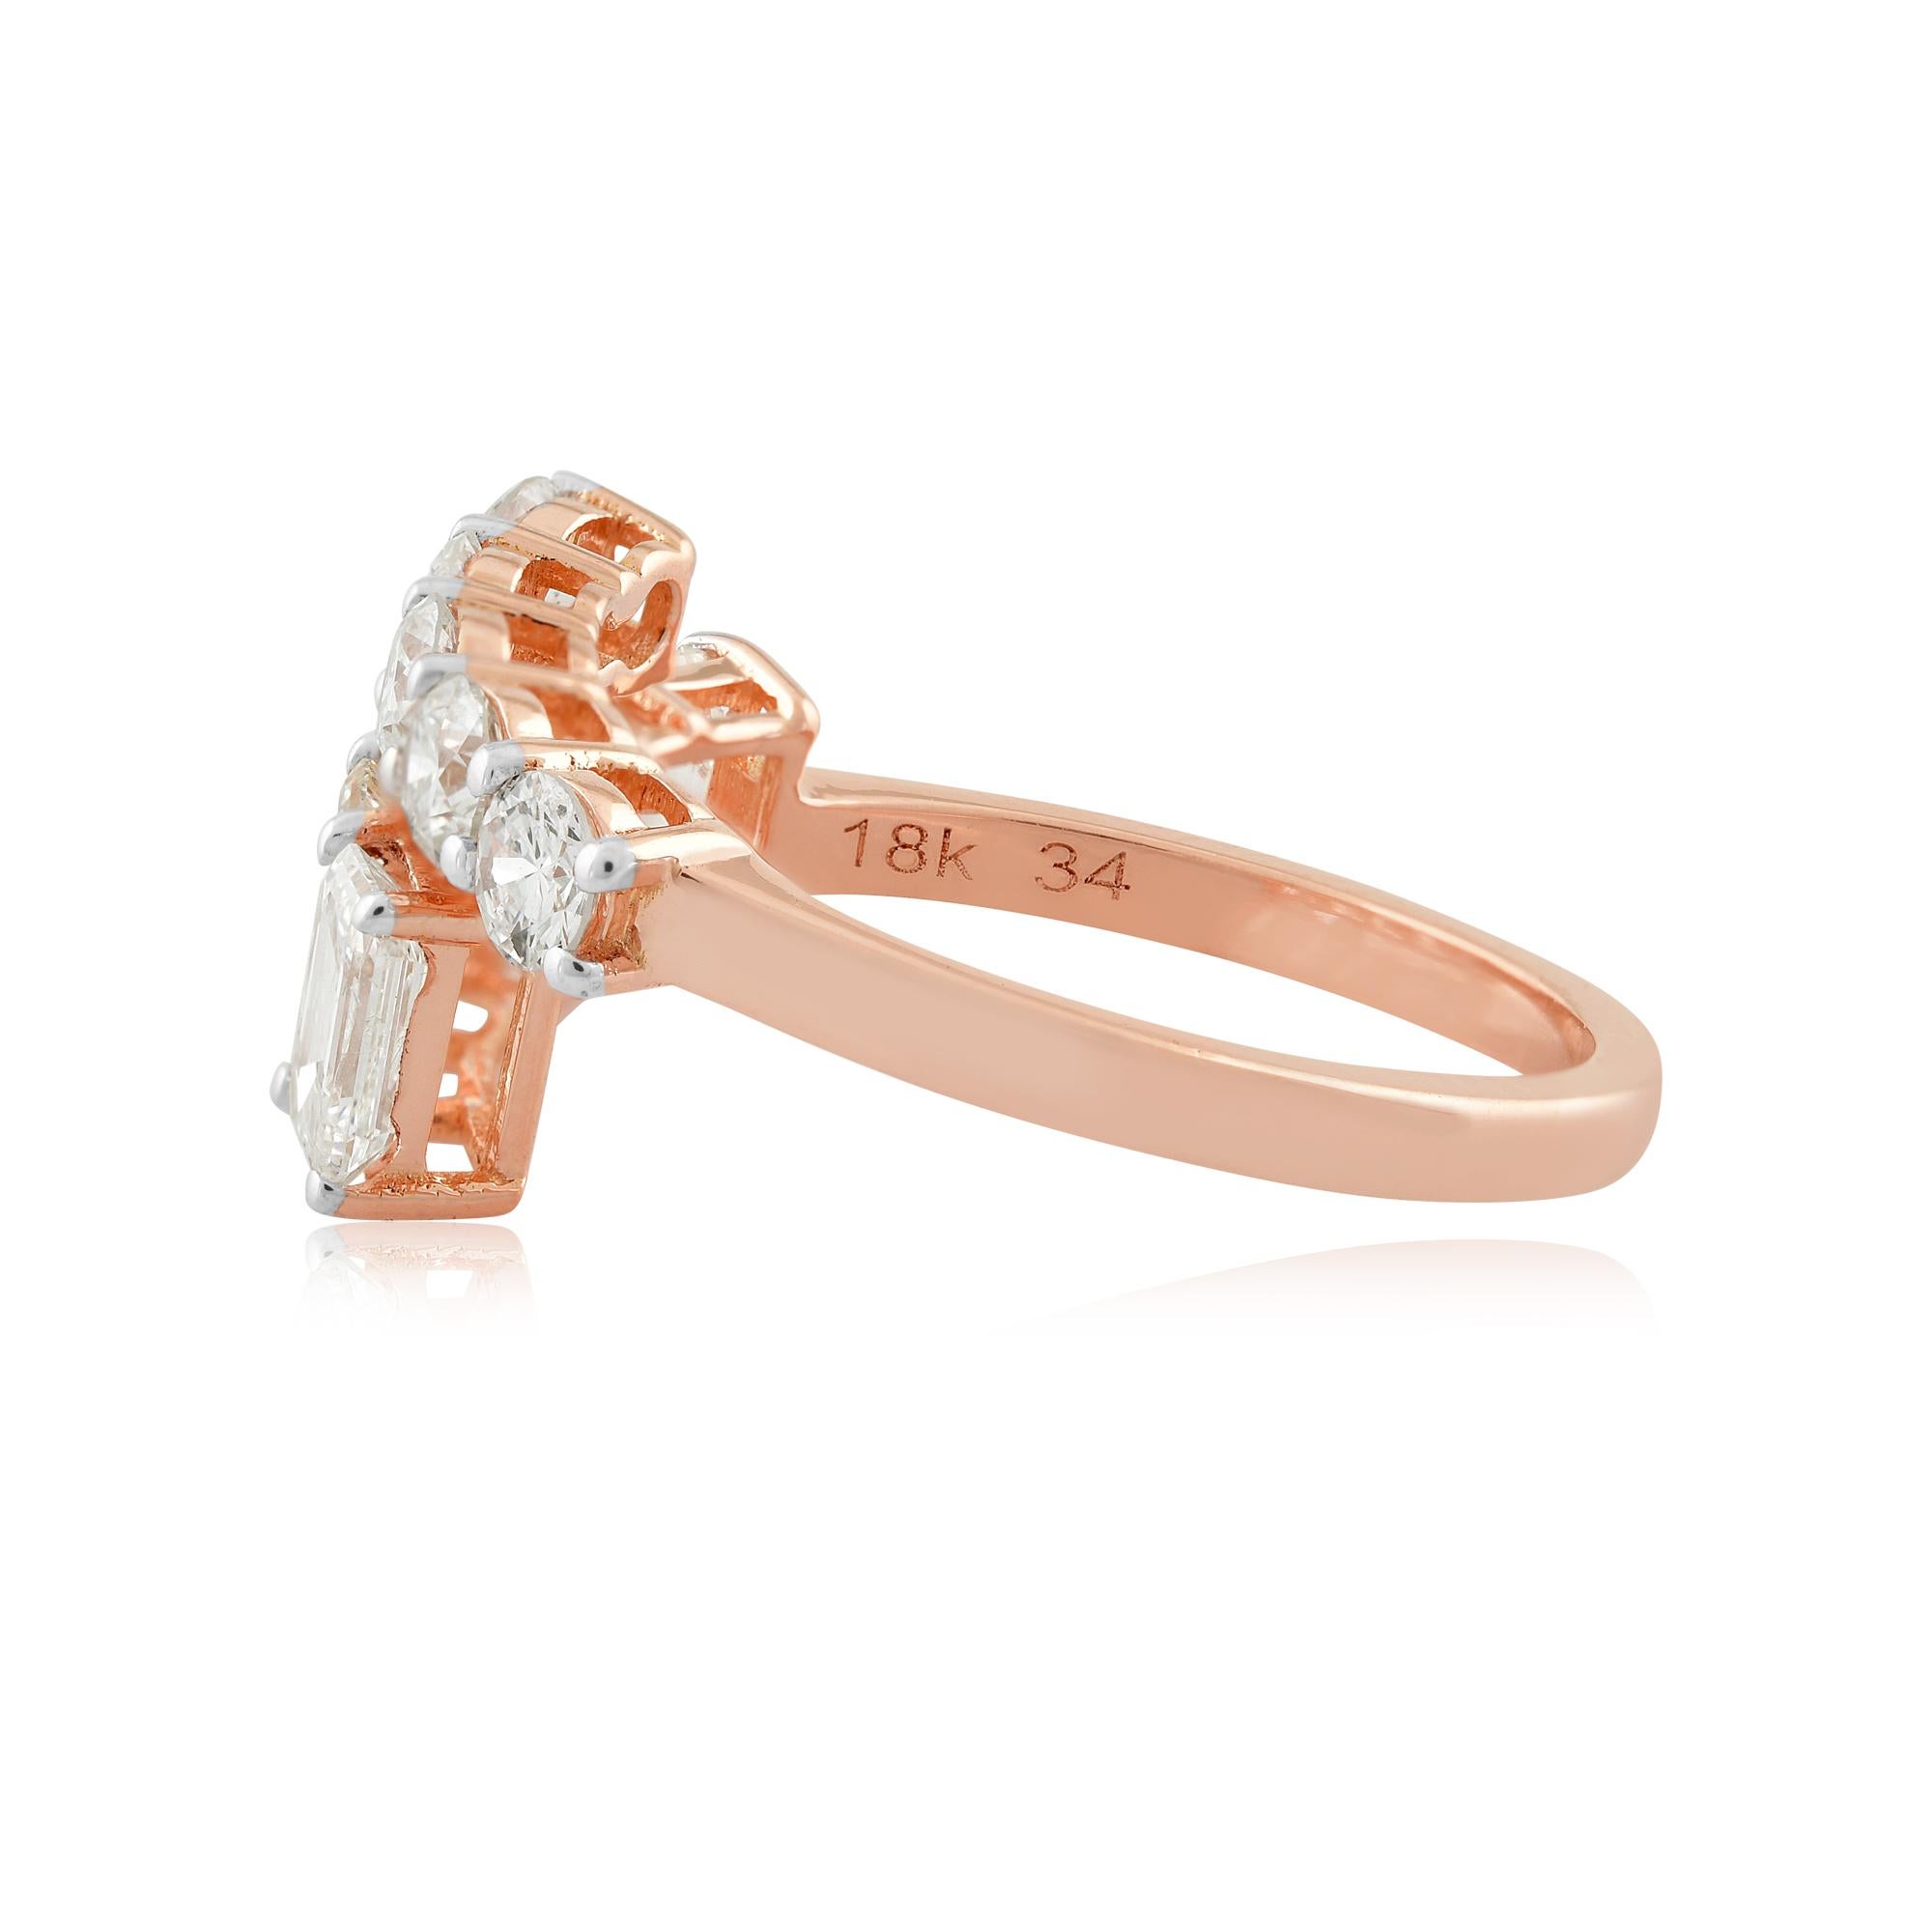 For Sale:  2.10 Carat SI Clarity HI Color Emerald Cut Diamond Fine Wrap Ring 18k Rose Gold 2